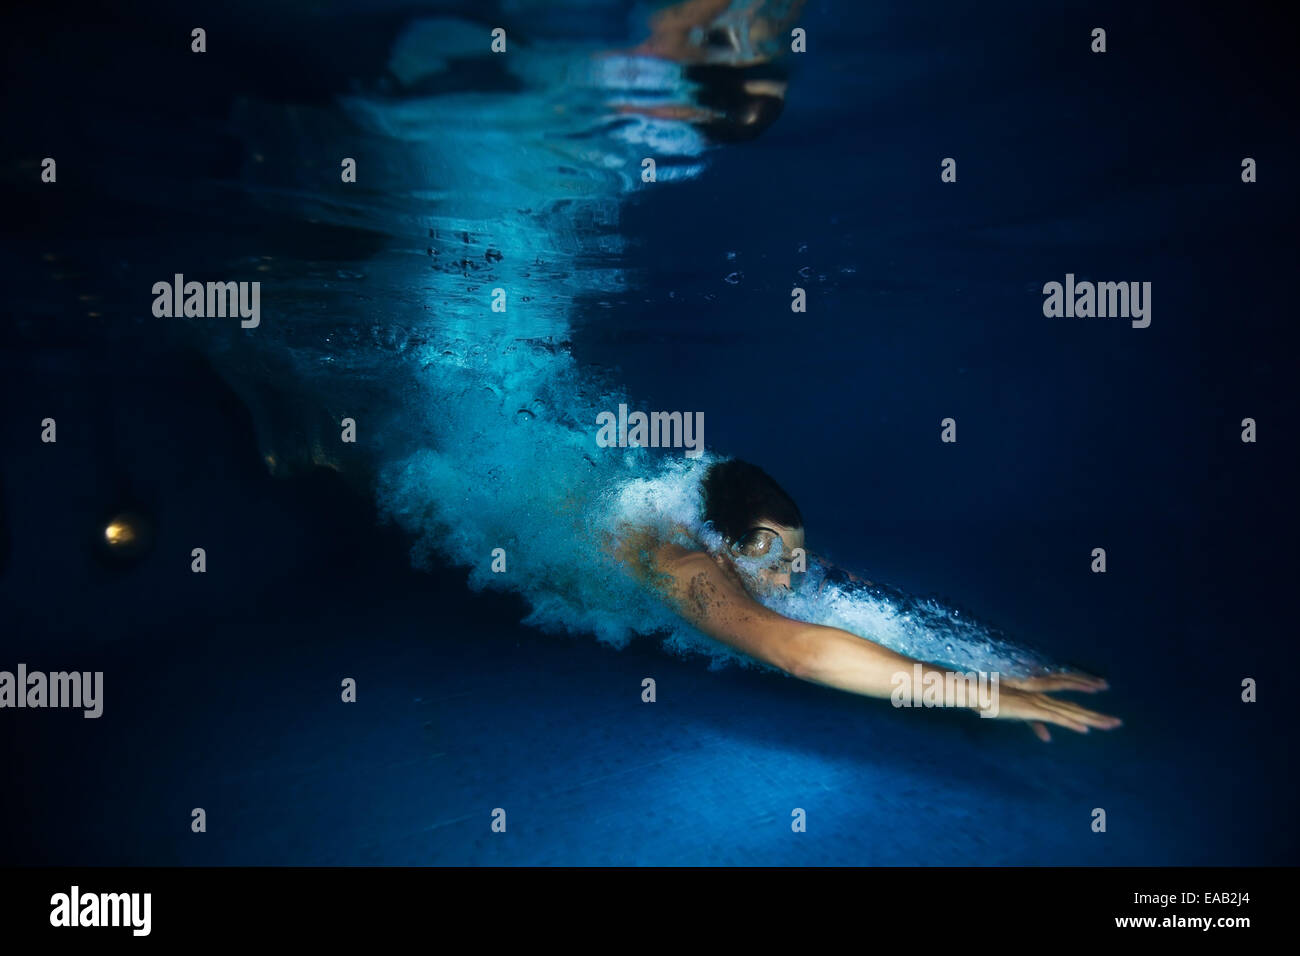 Man with splash swimming under dark blue water Stock Photo